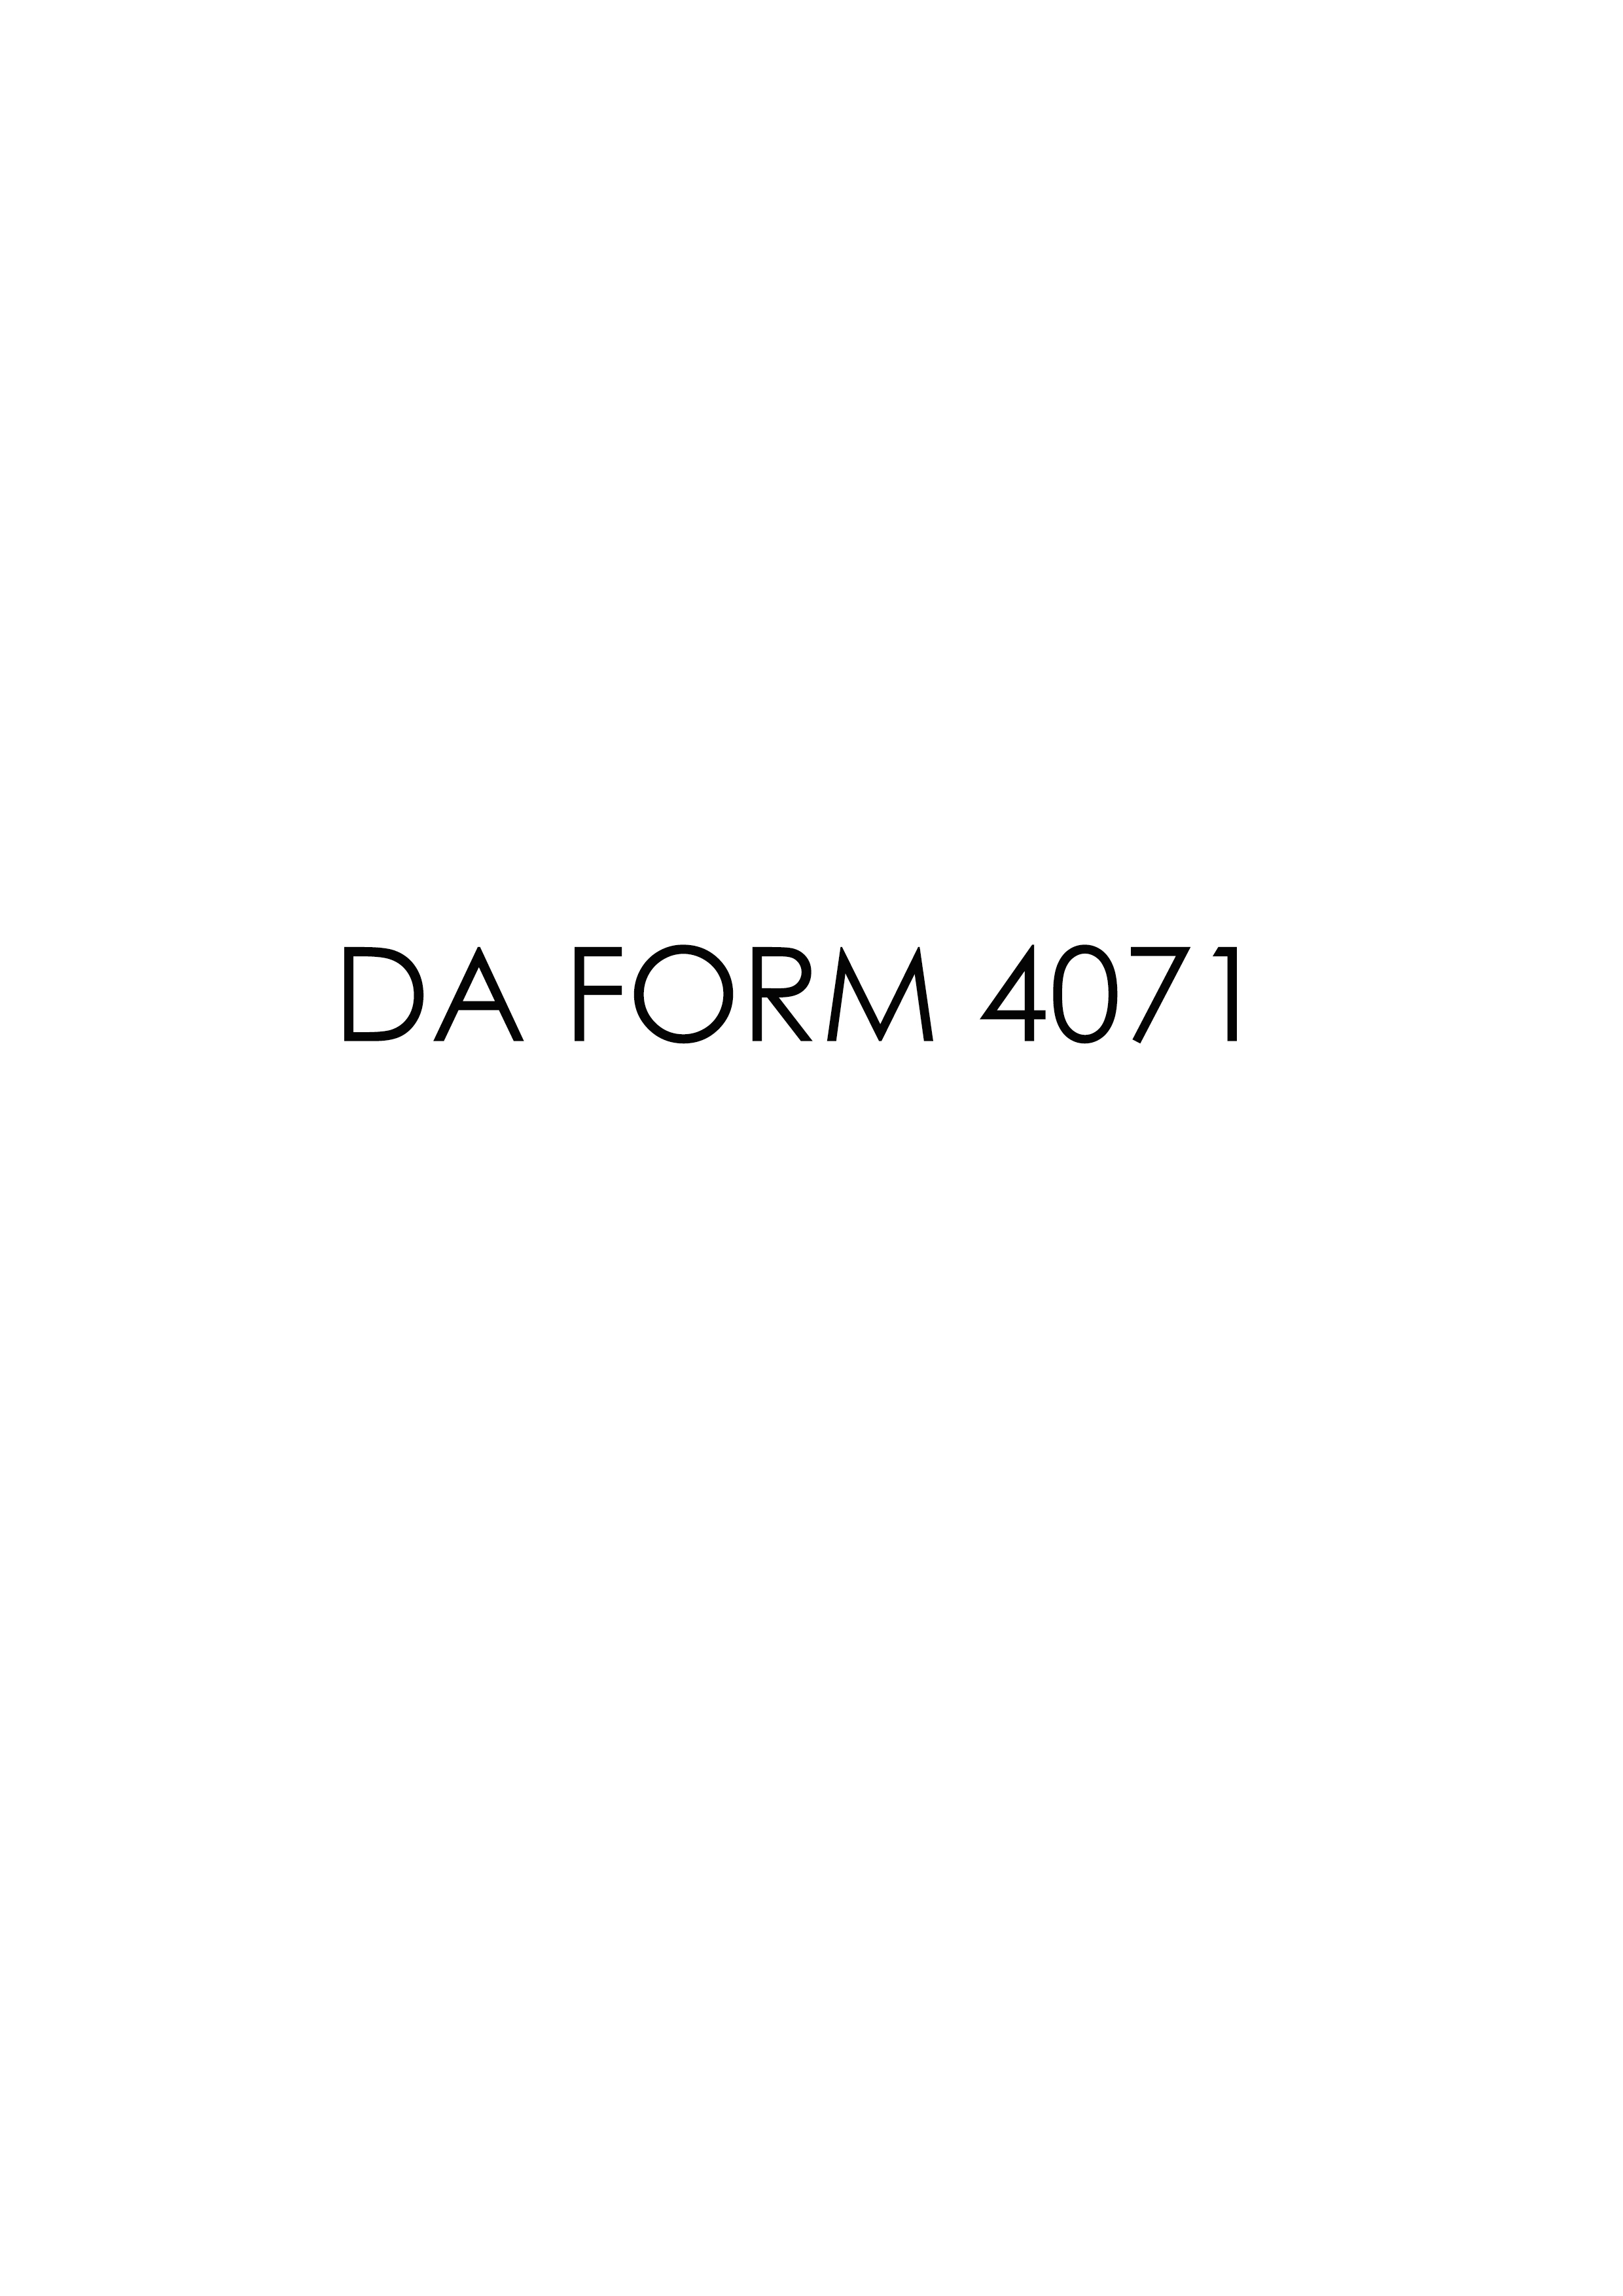 Download da 4071 Form